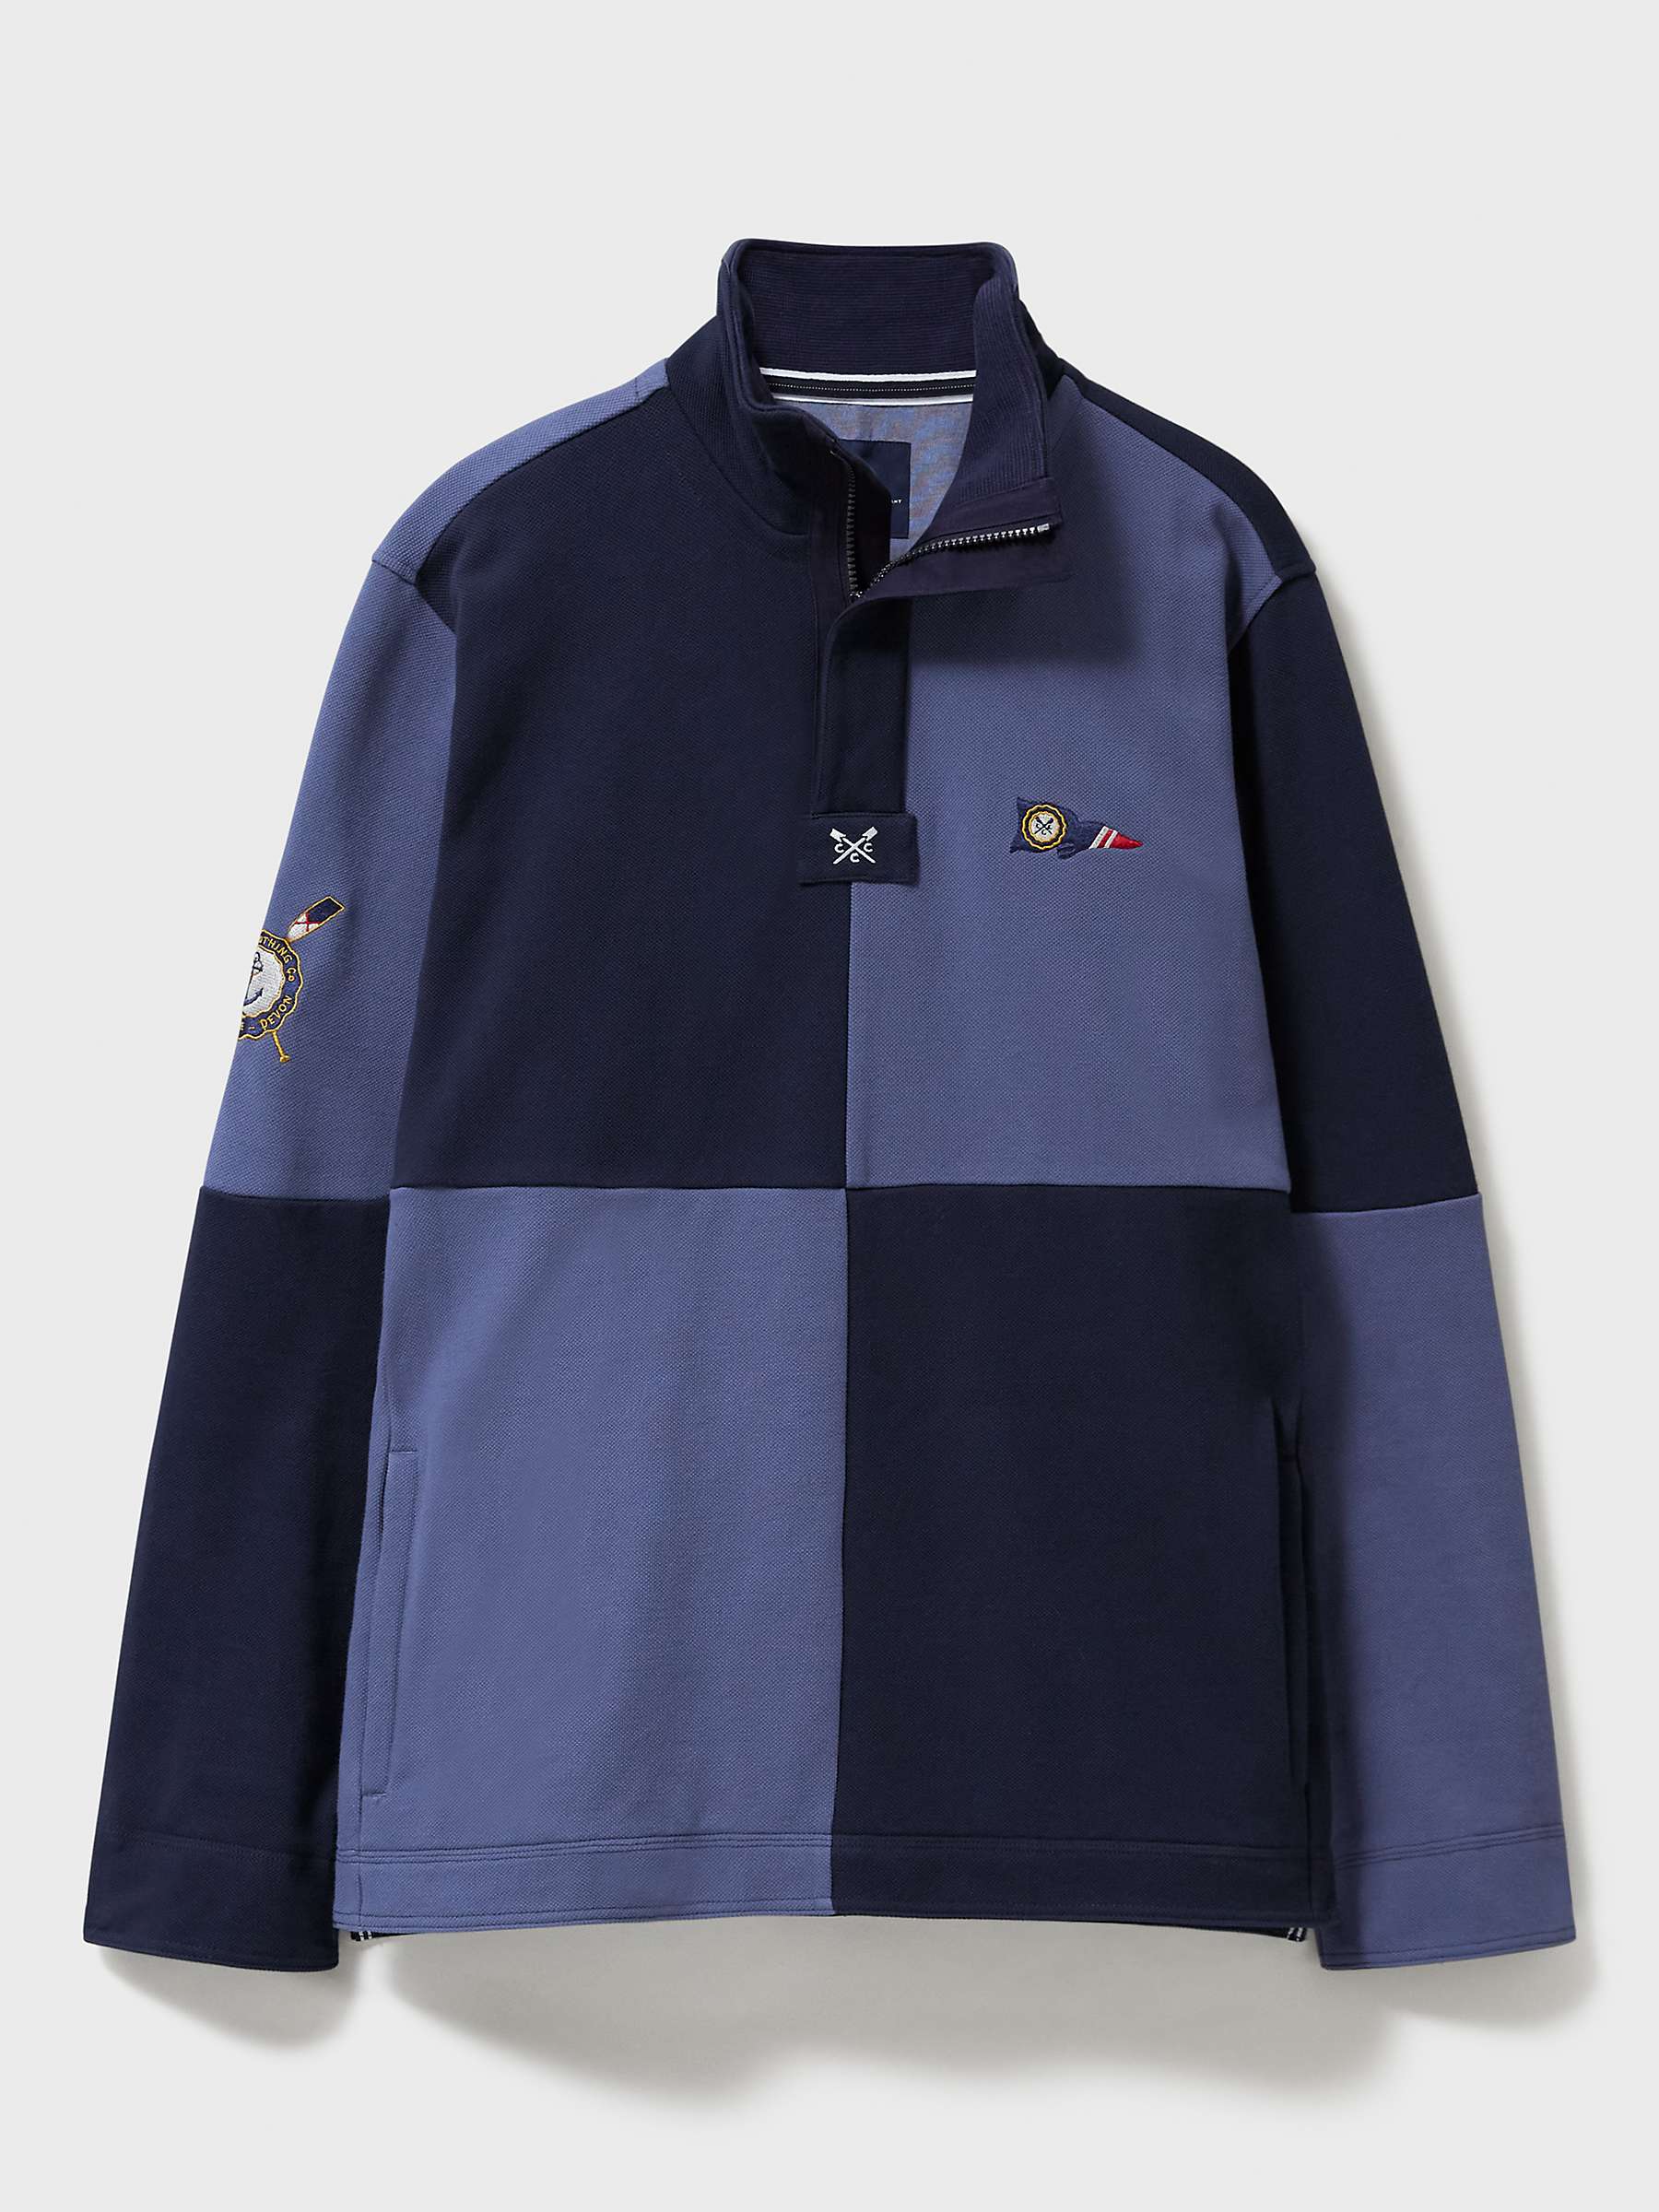 Buy Crew Clothing Classic Applique Padstow Sweatshirt, Navy Blue Online at johnlewis.com